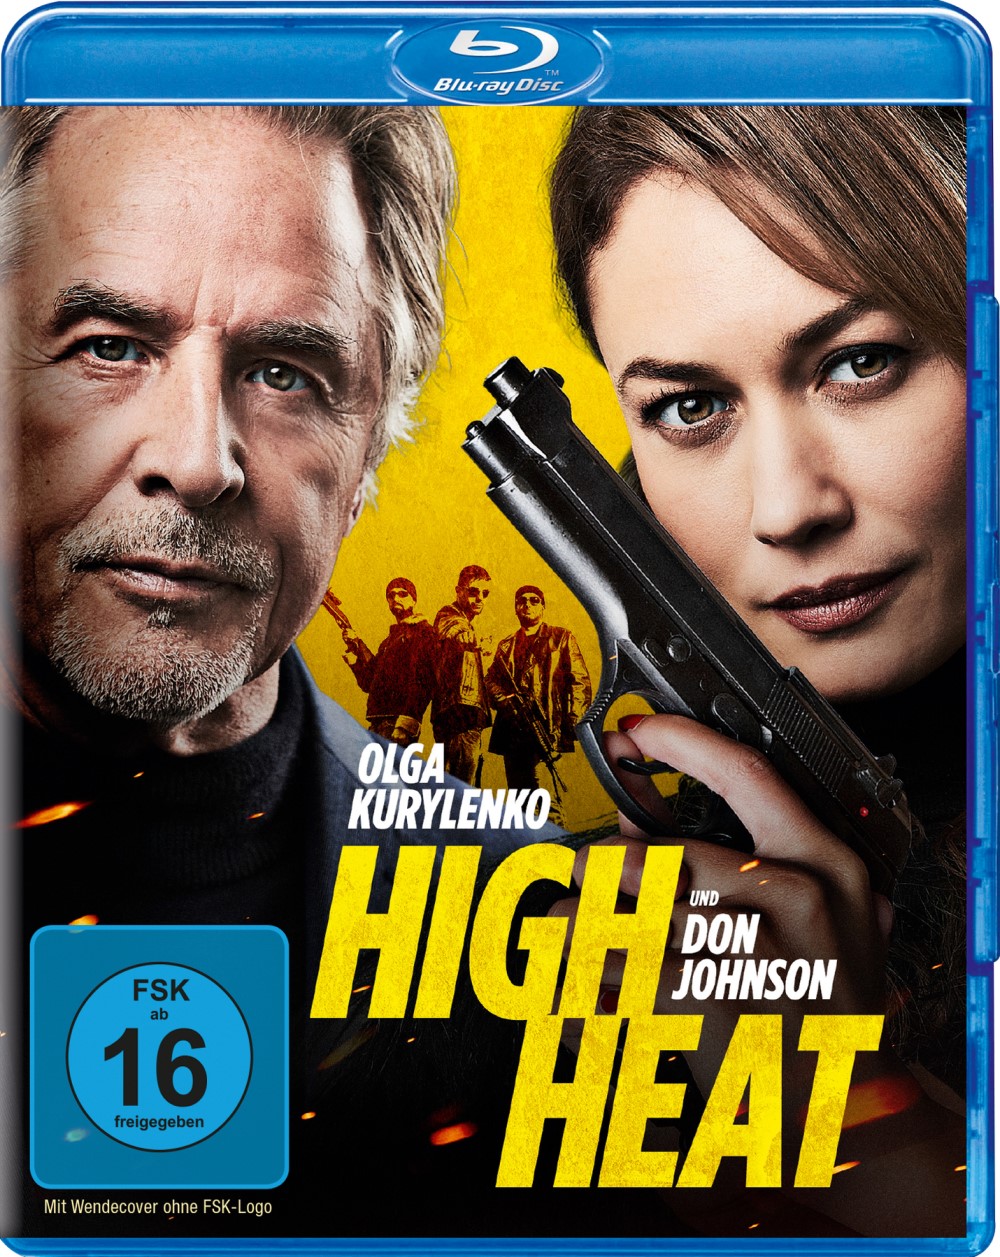 High Heat Trailer & Blu-ray Cover